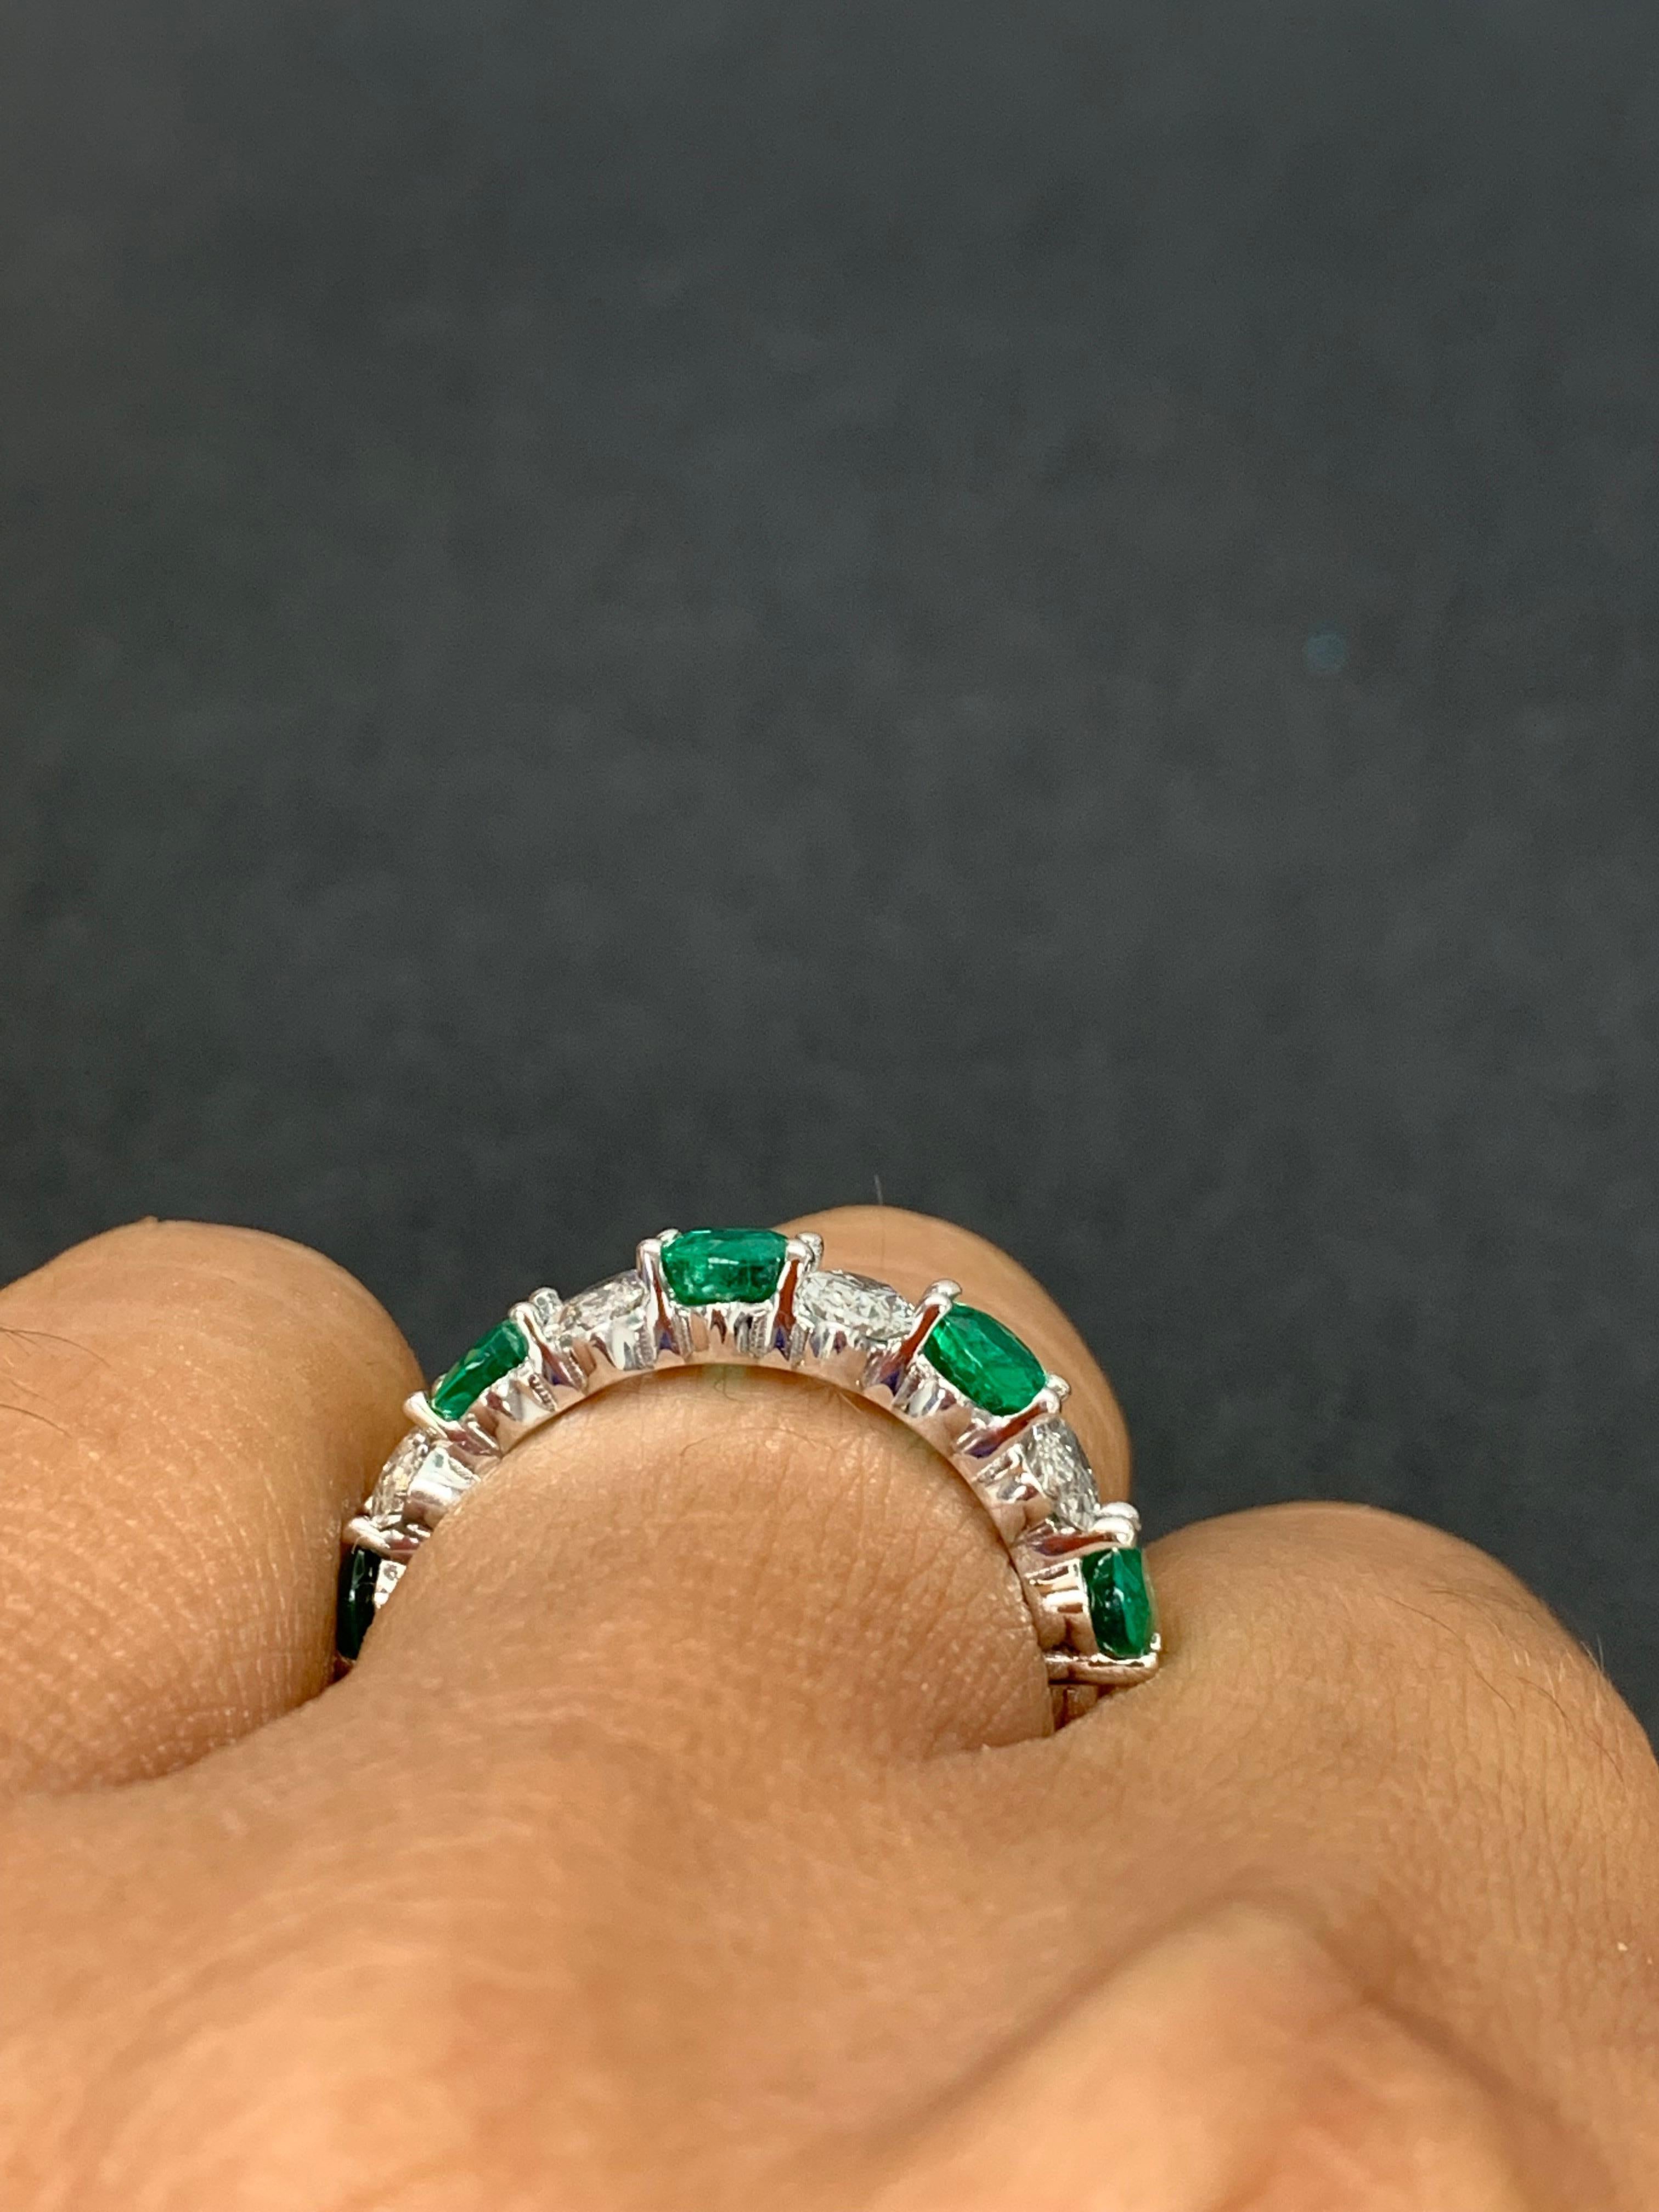 Women's 1.89 carat Oval Cut Emerald Diamond Eternity Wedding Band in 14K White Gold For Sale